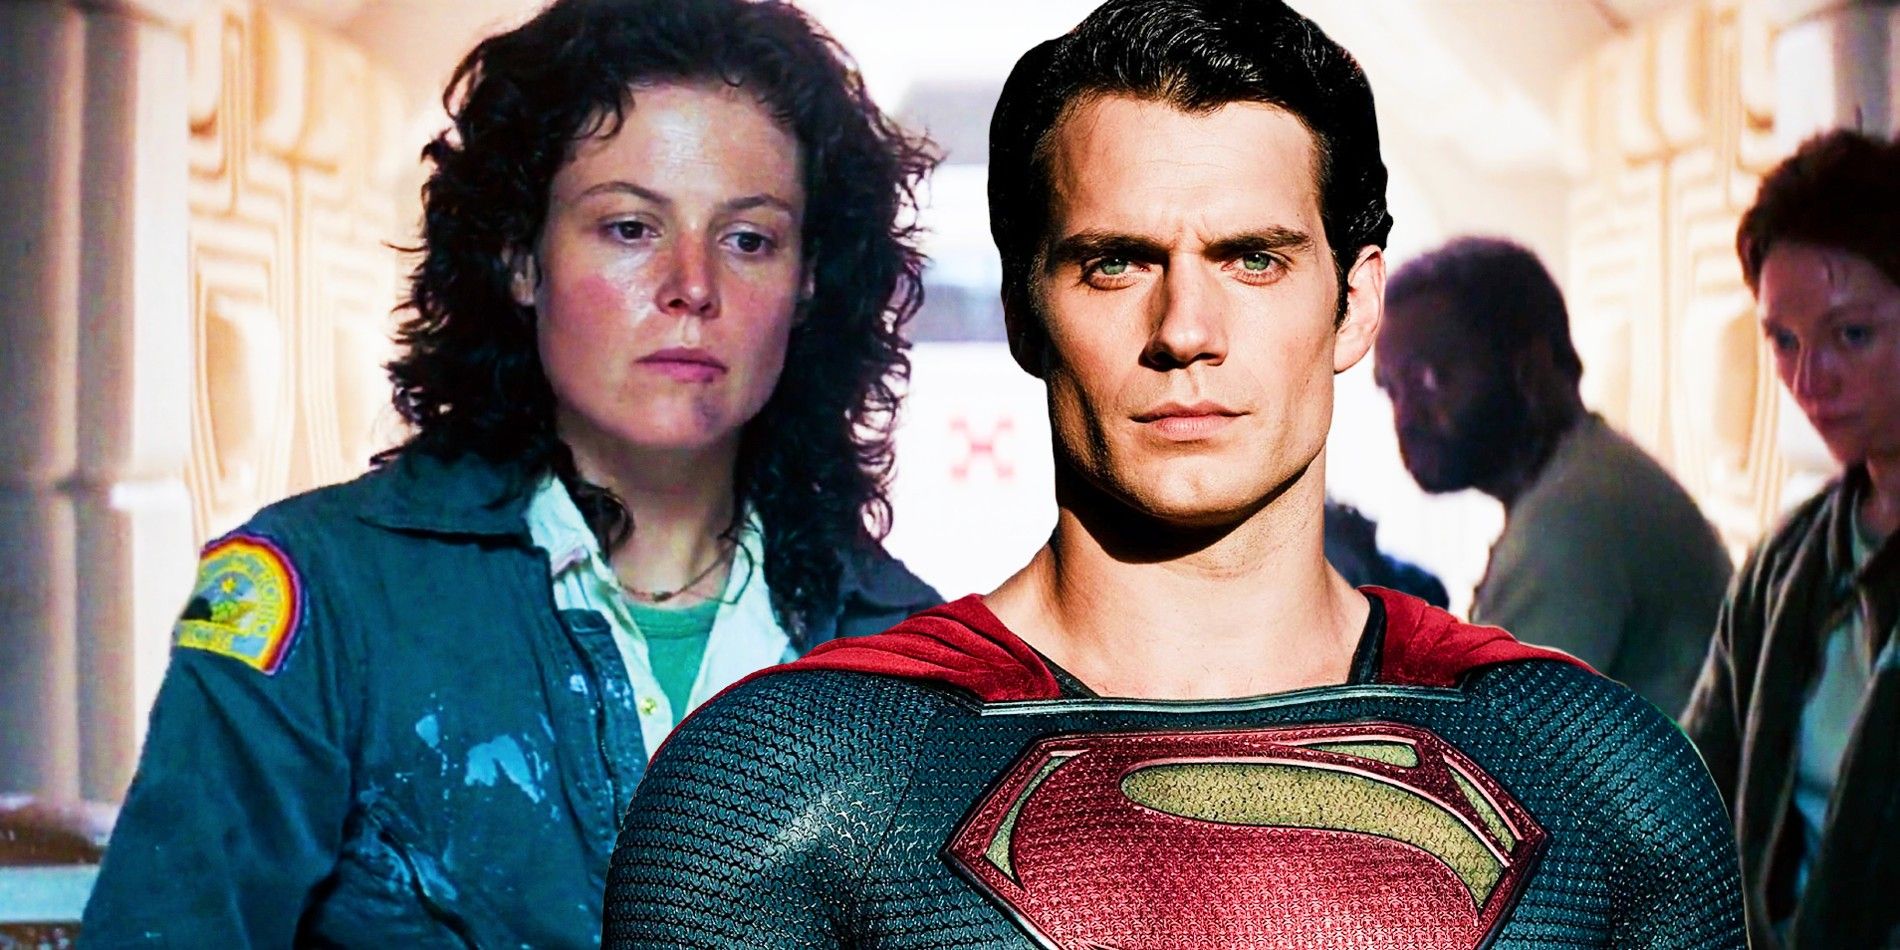 Ridley Scott revela que rechazó varias películas de superhéroes porque sus historias son “mejores”